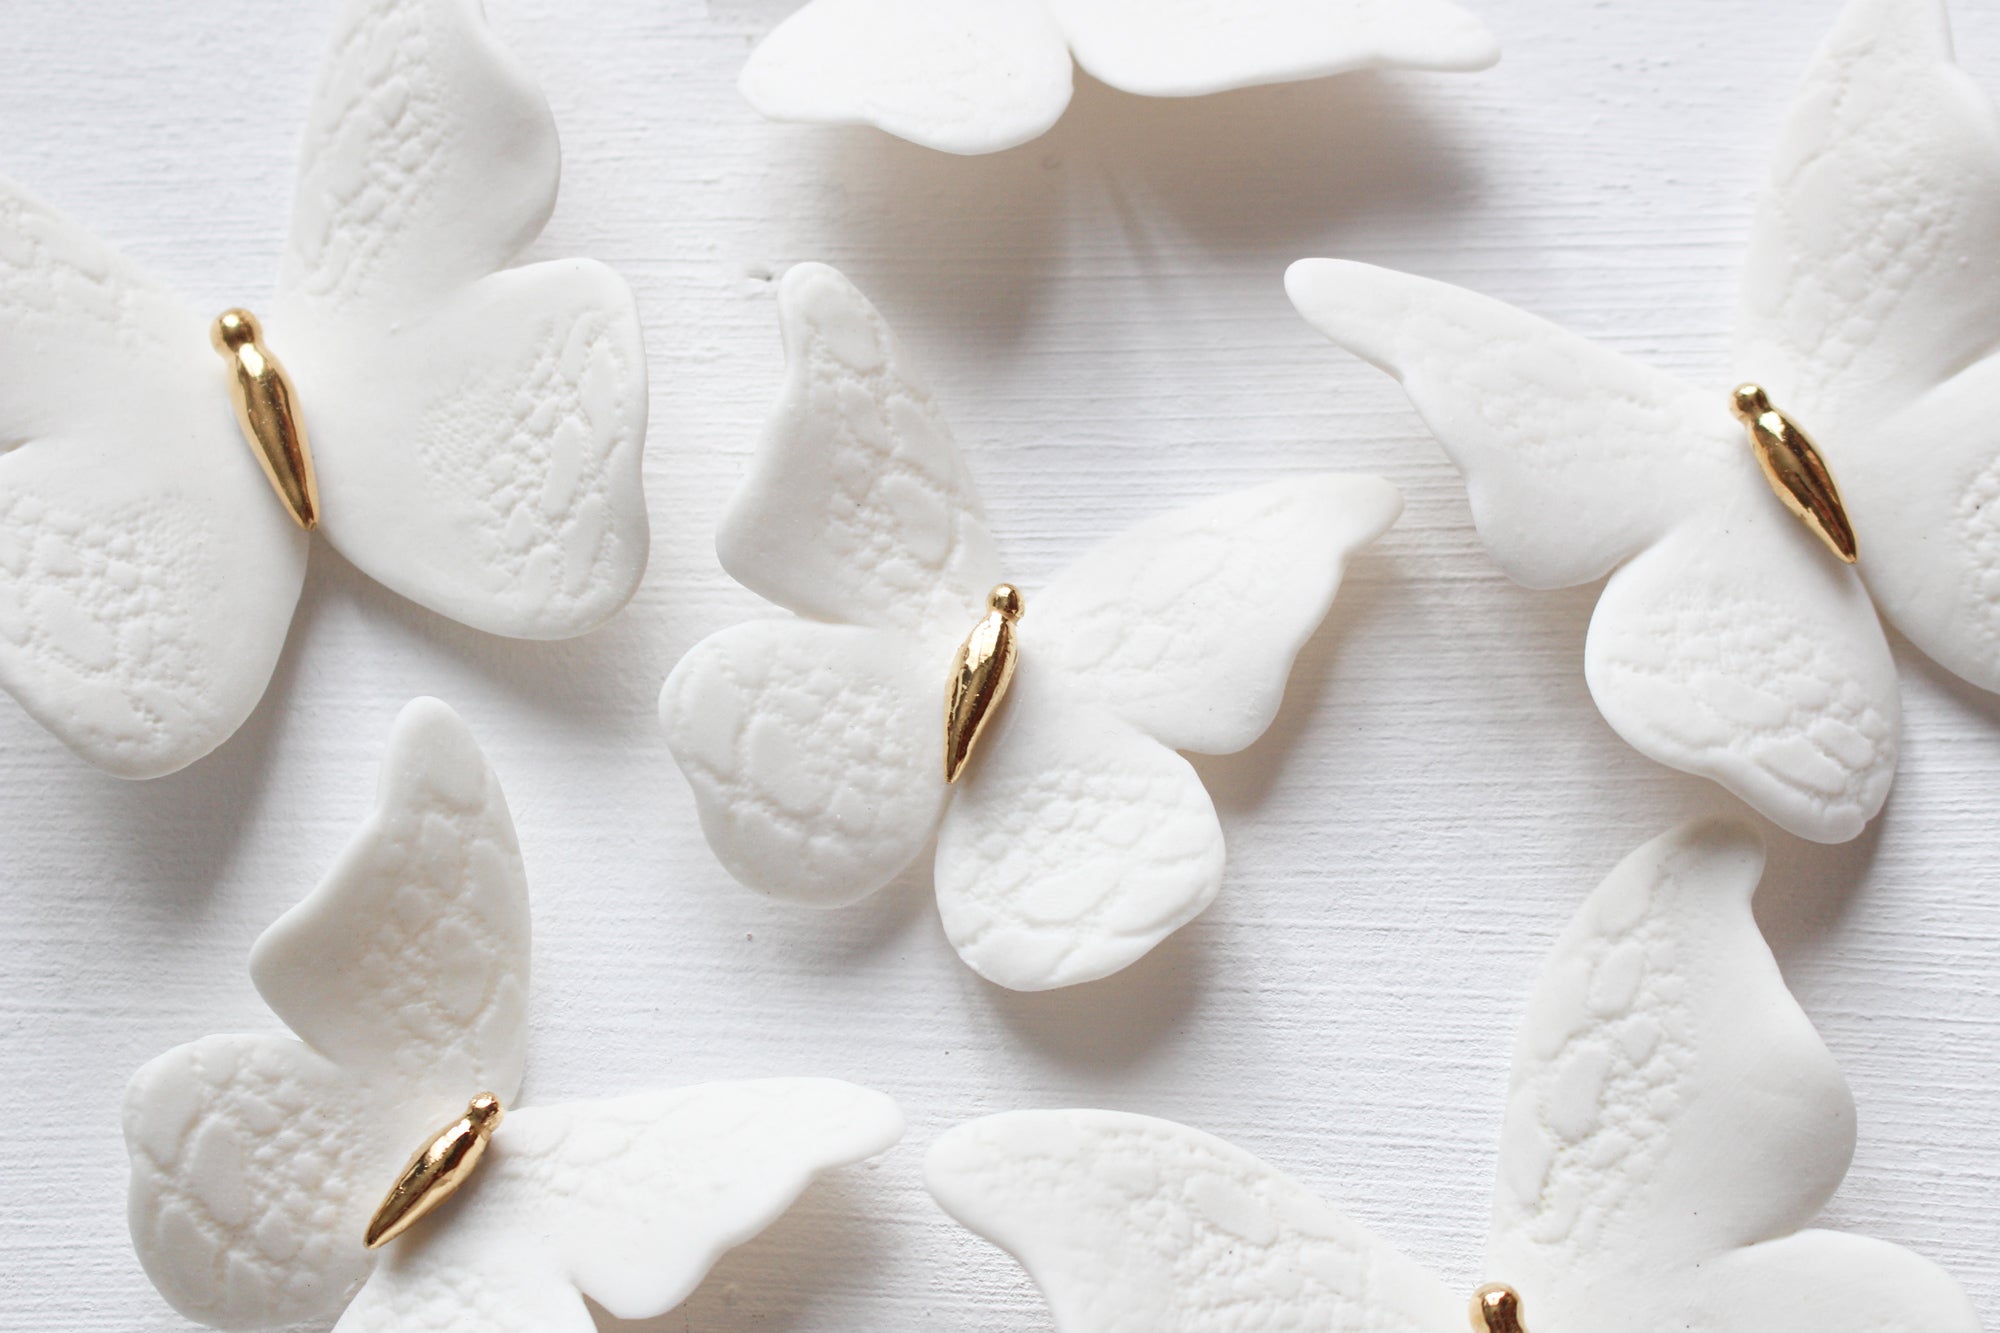 White Porcelain Butterflies handmade in France by Alain Granell